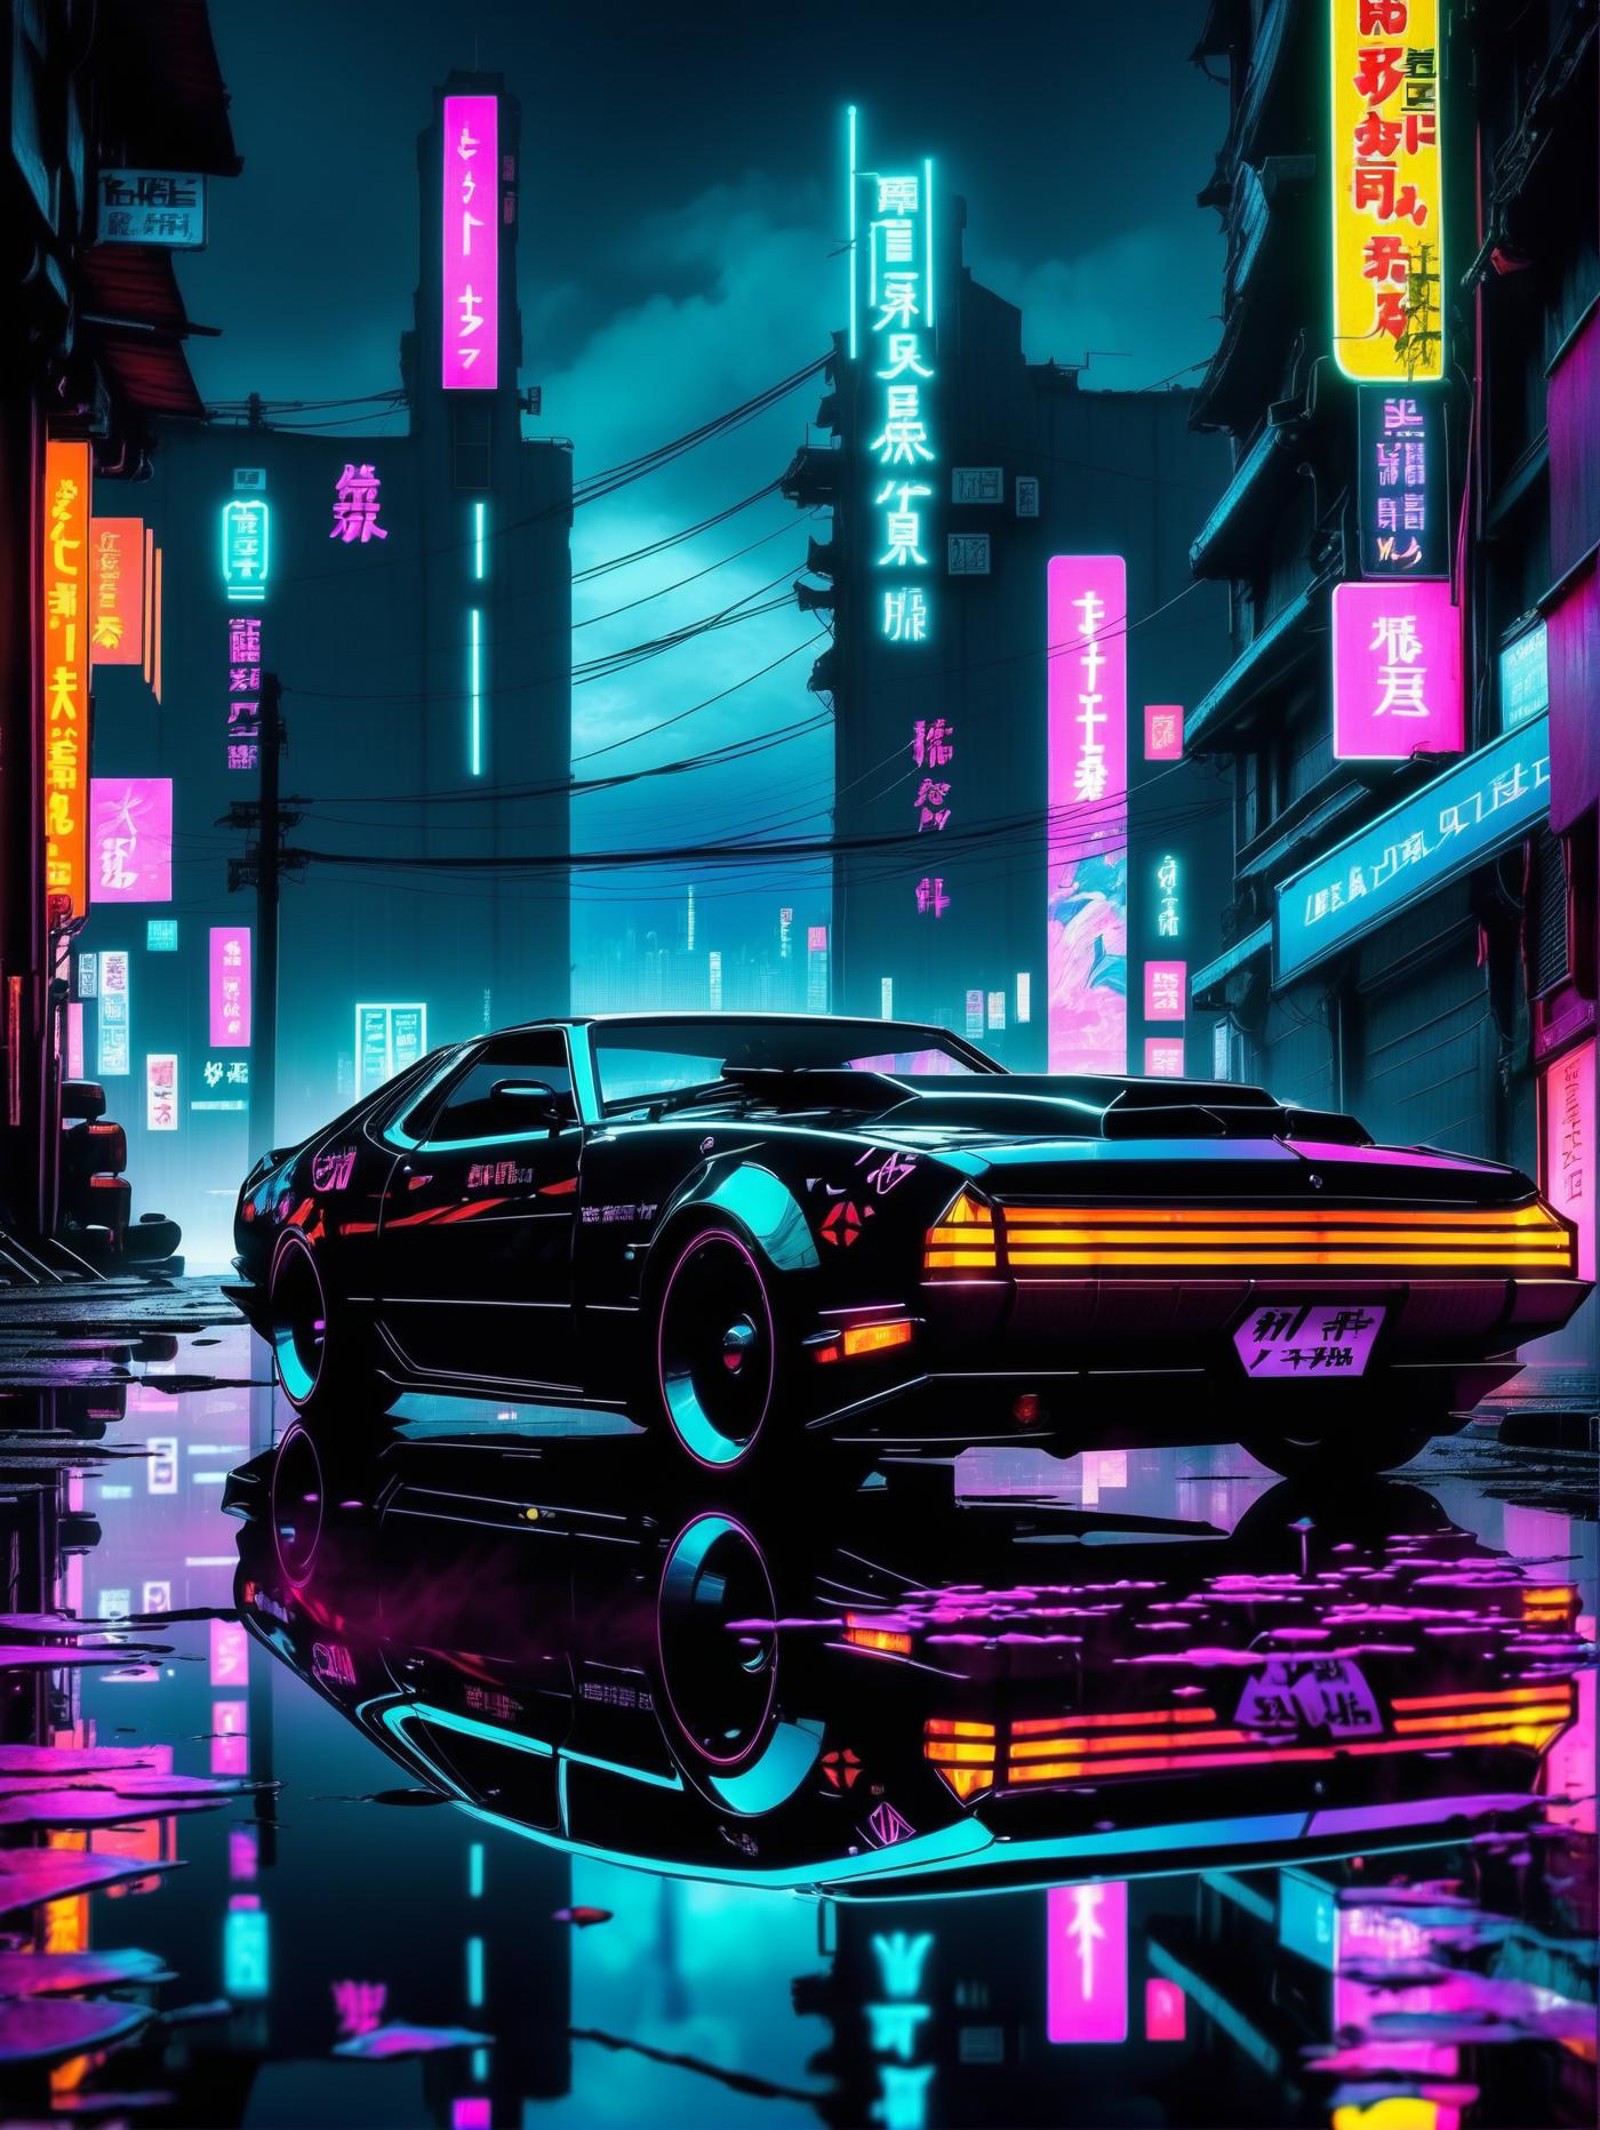 (dark anime art), cyberpunk war car, dark city, reflective puddles, neon signs